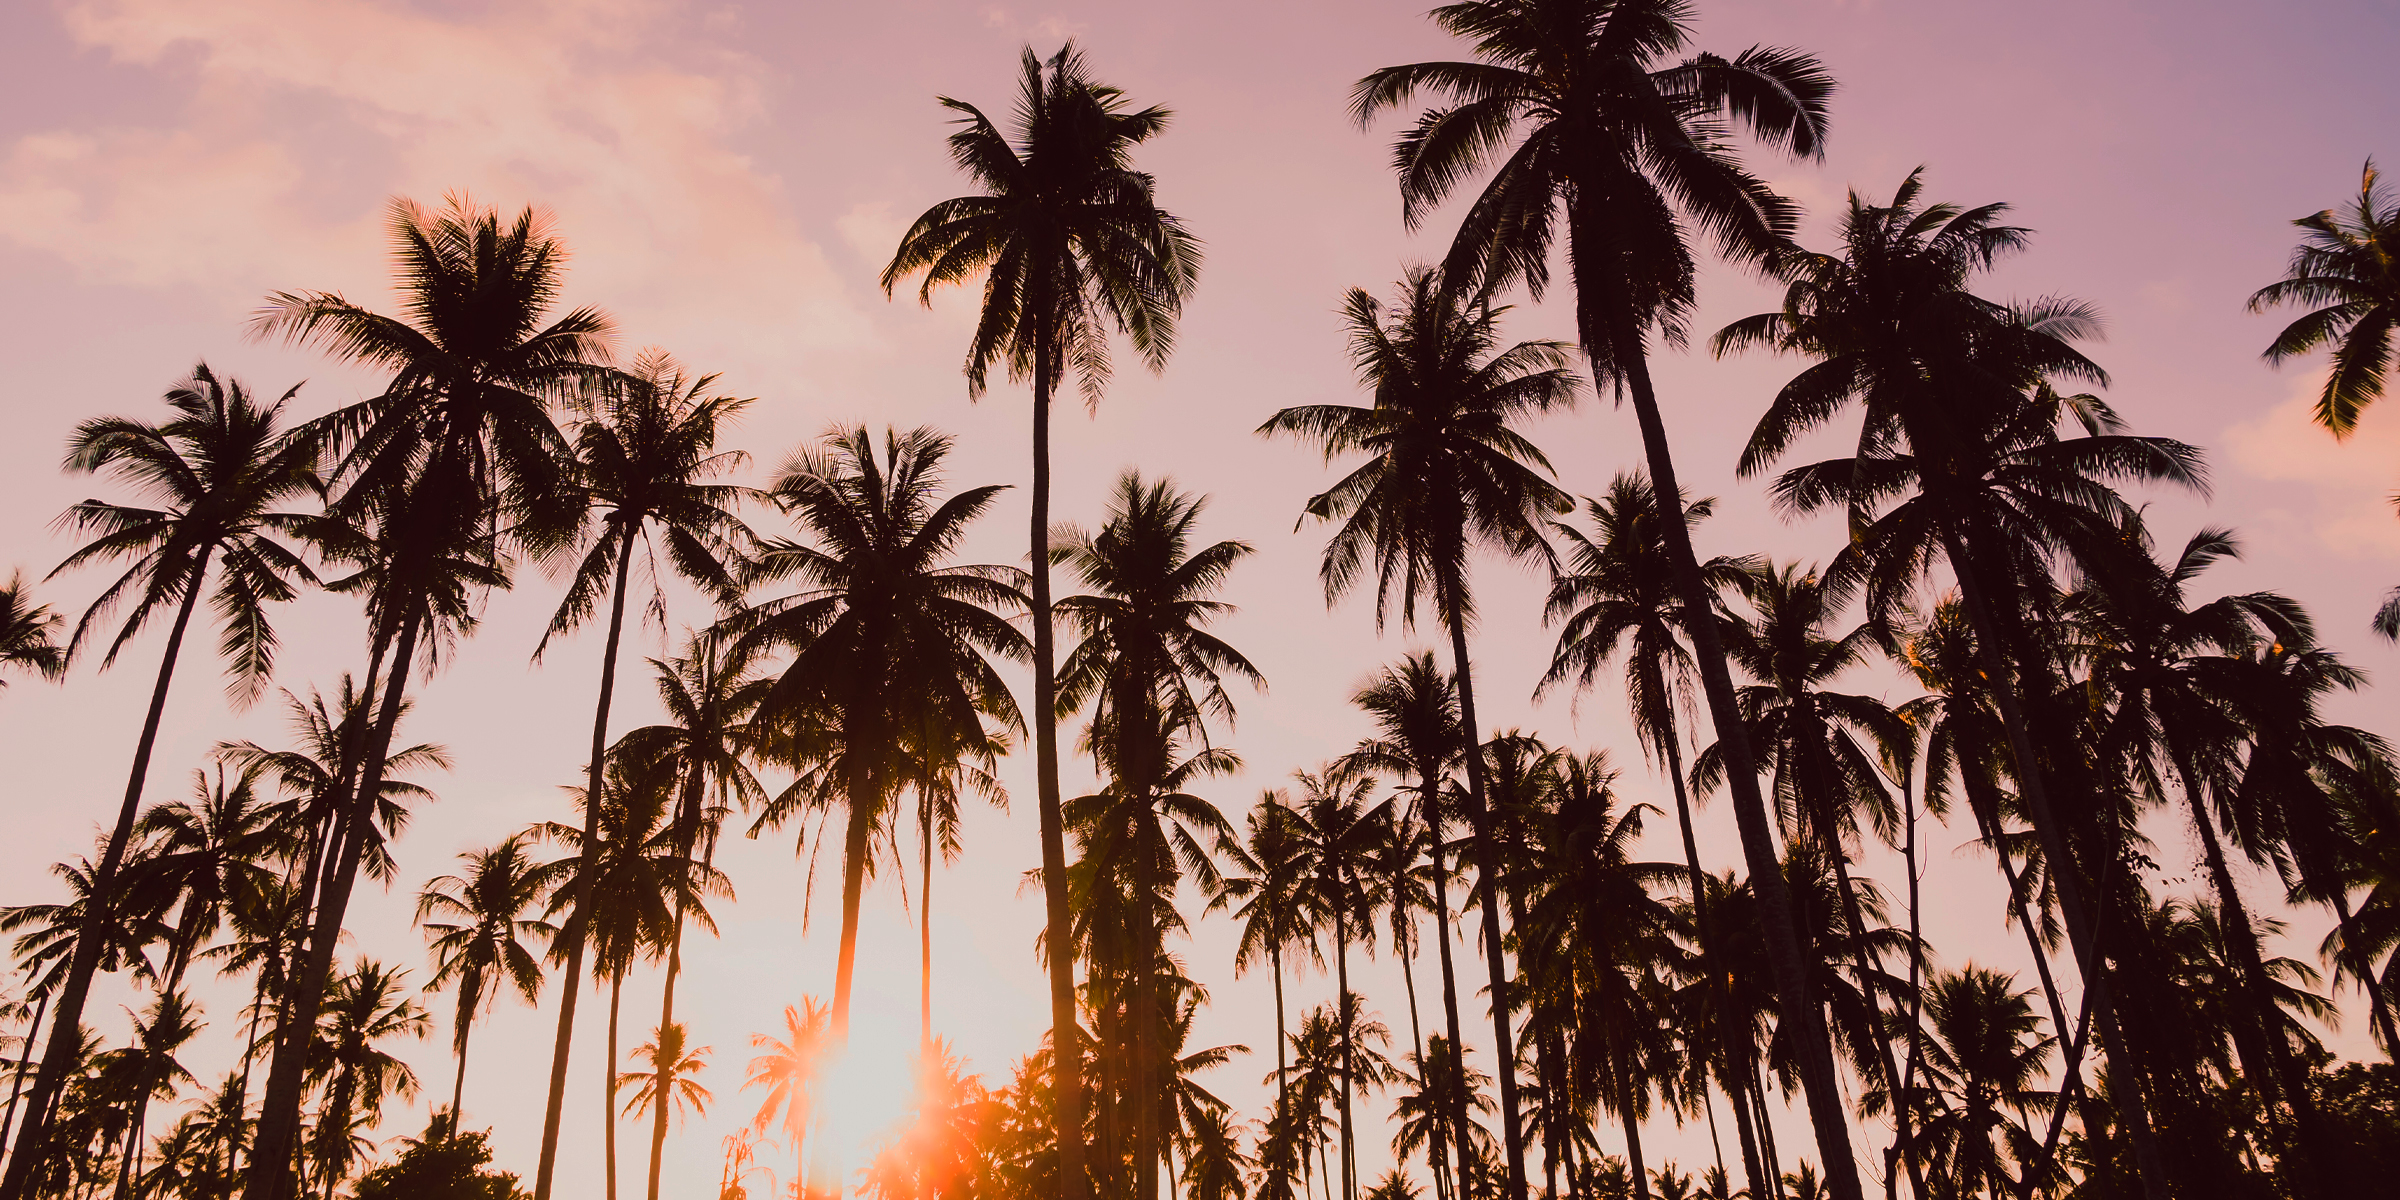 Palm trees | Source: freepik